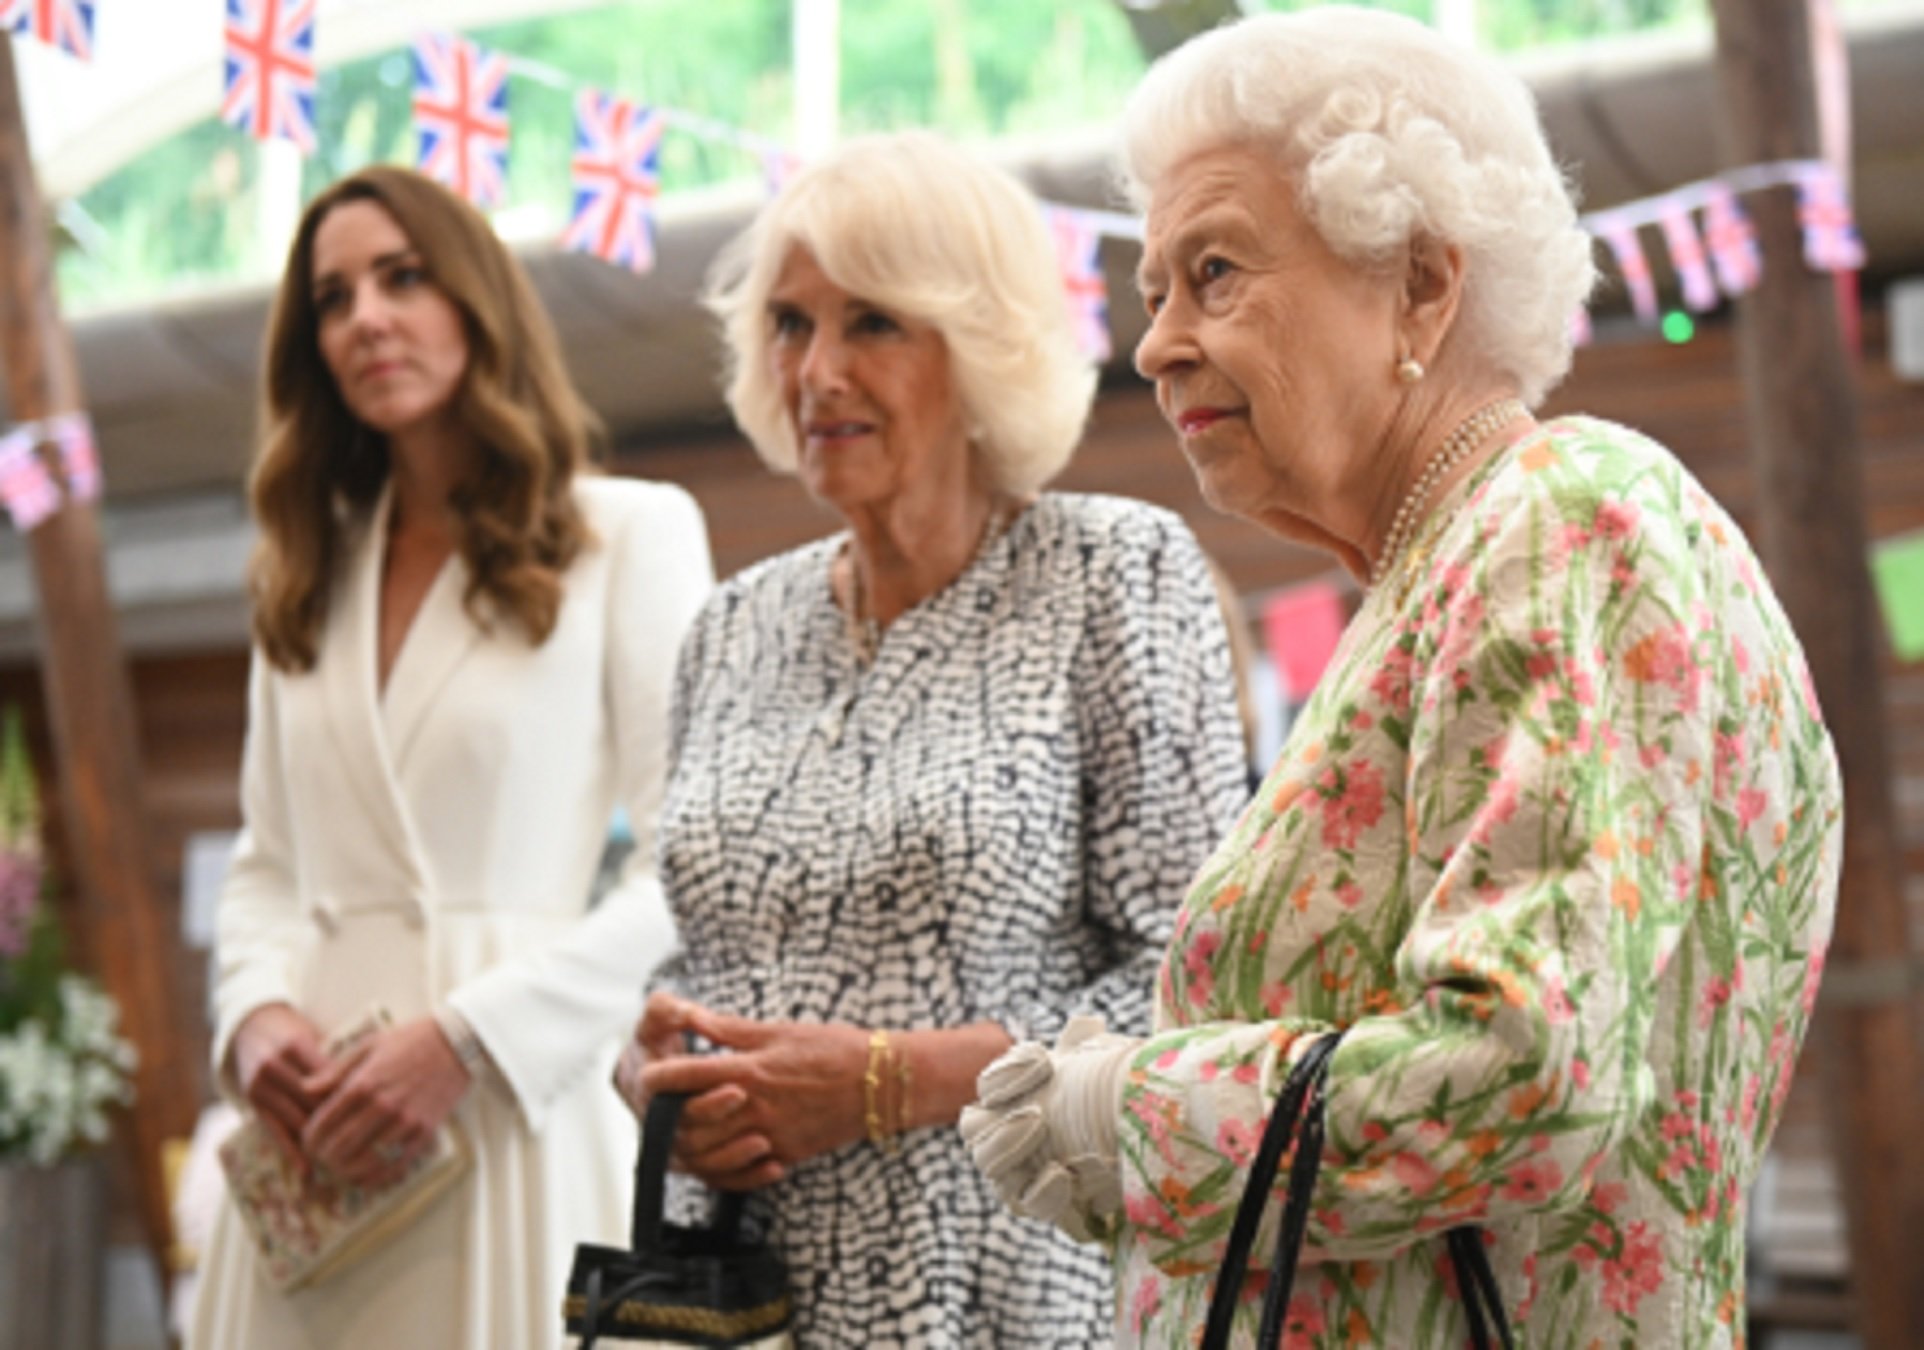 Camilla Parker y La Reina Isabel II   The Royal Family web